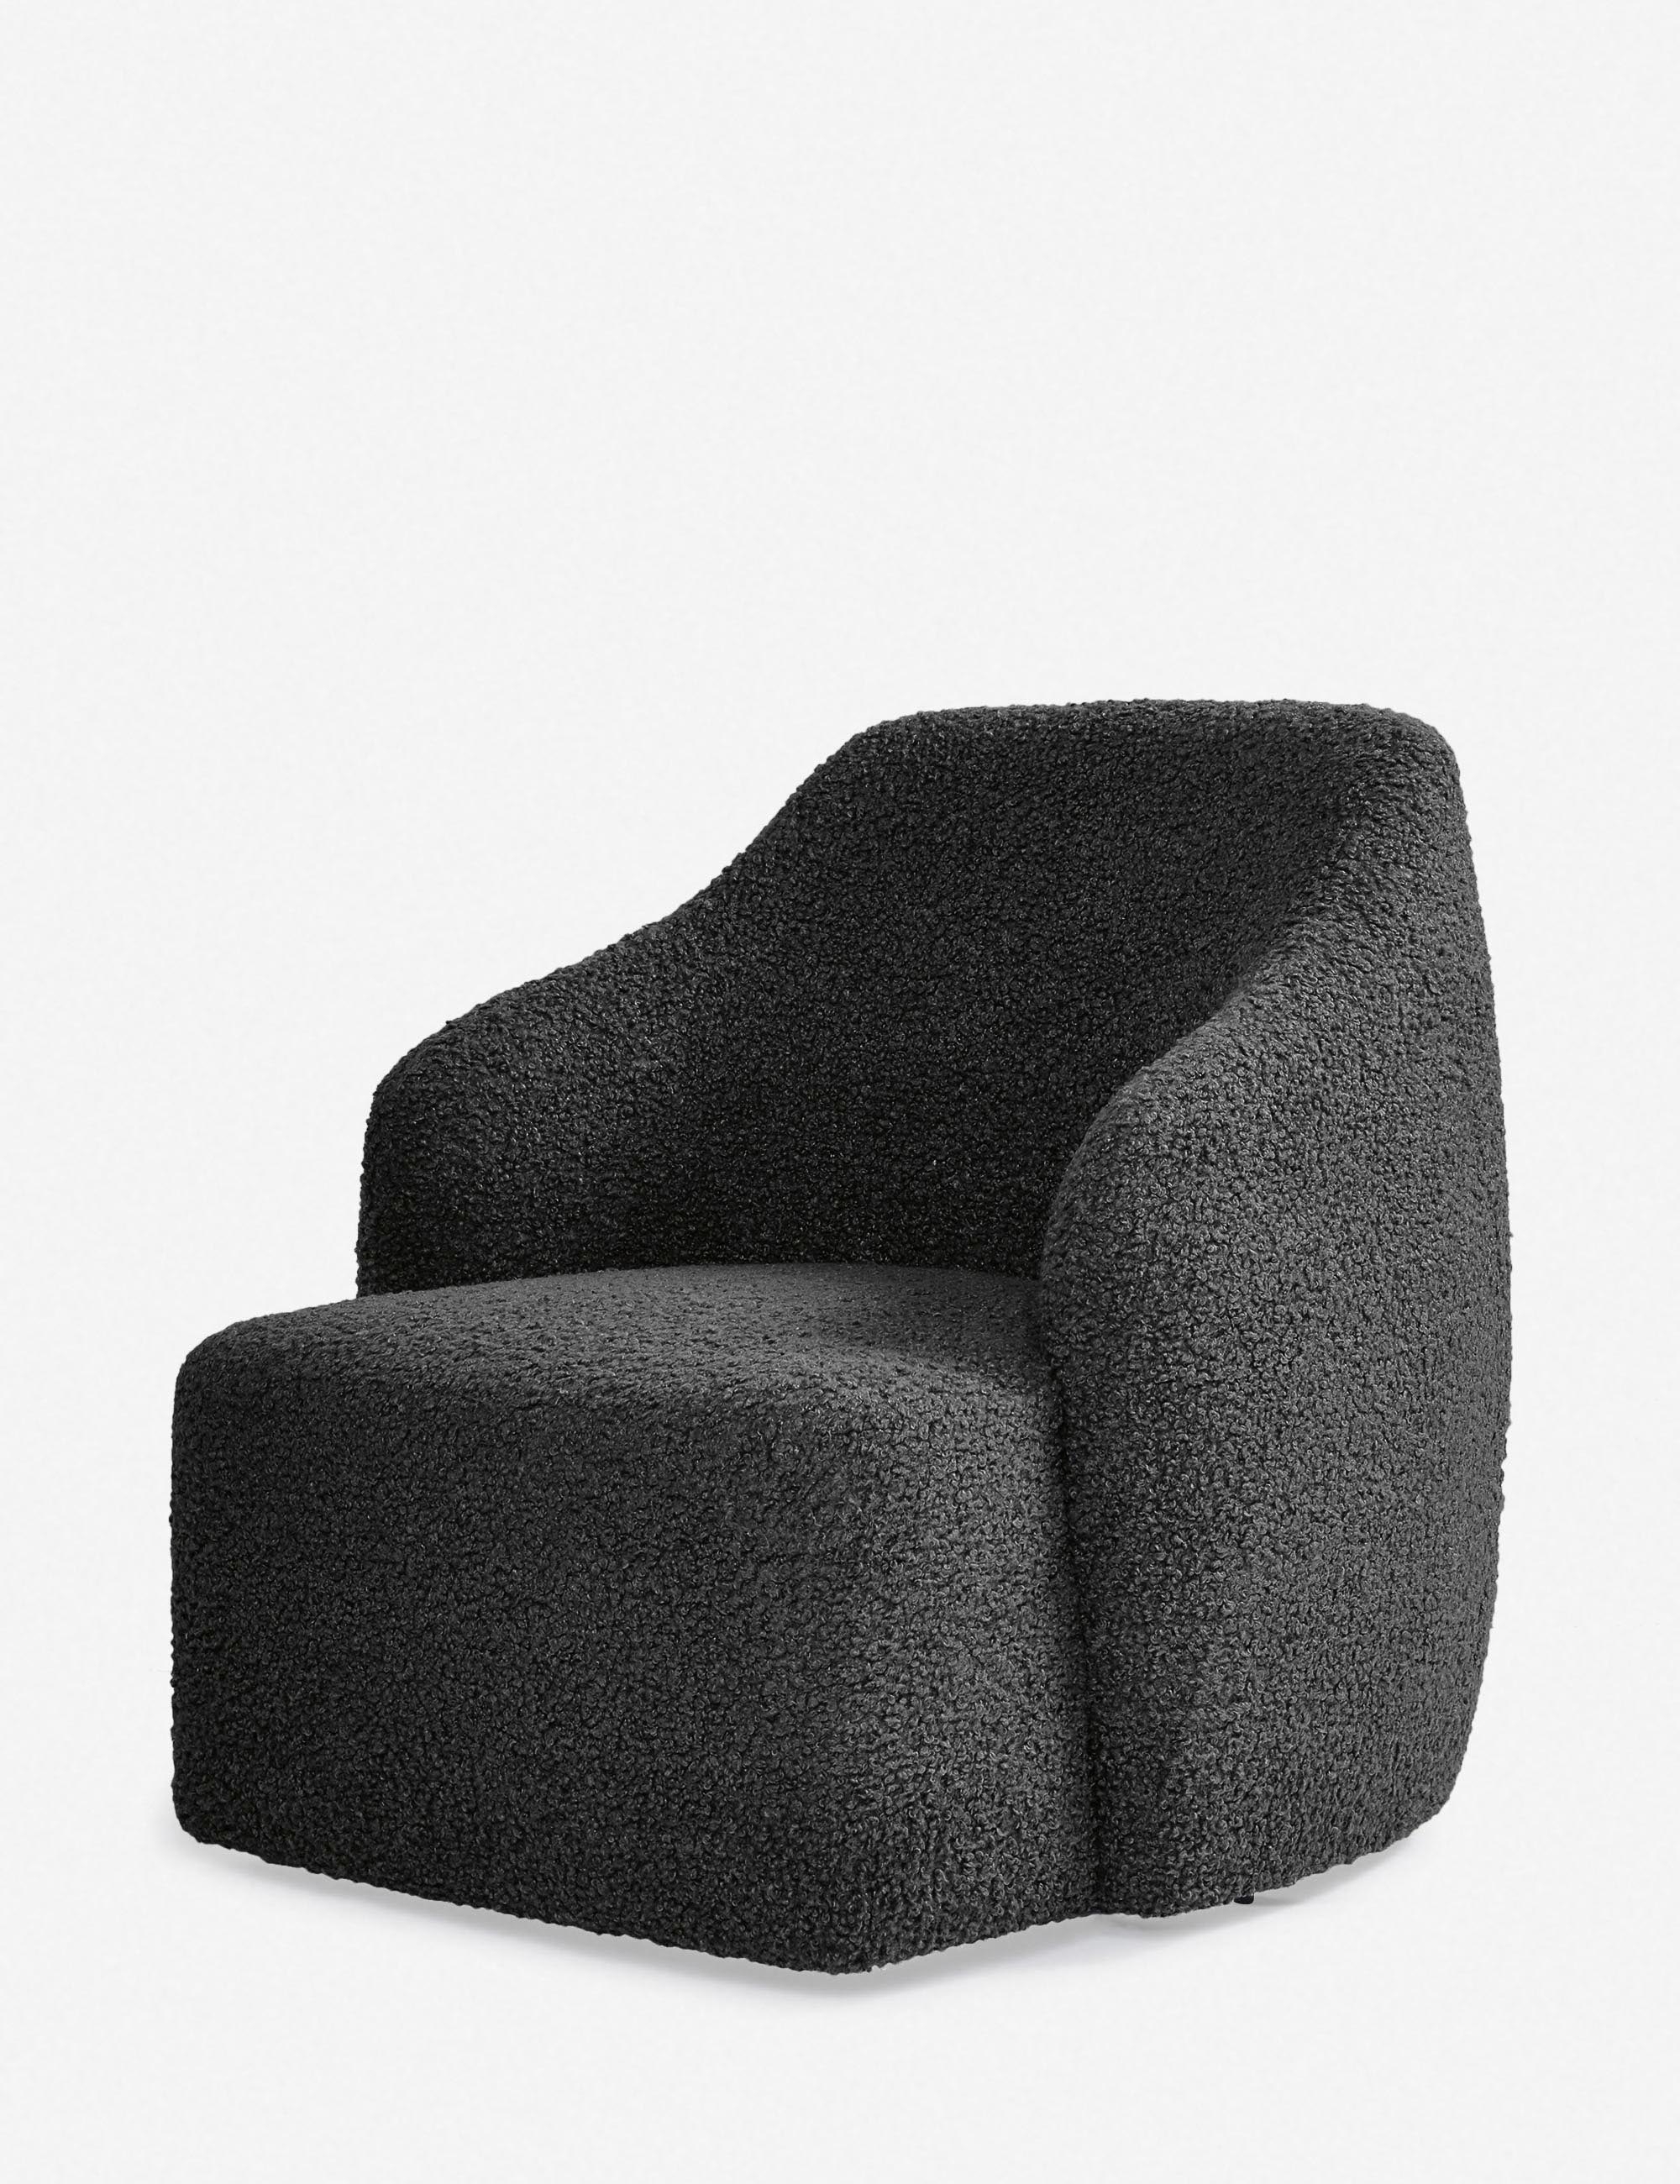 Tobi Swivel Chair - Image 8